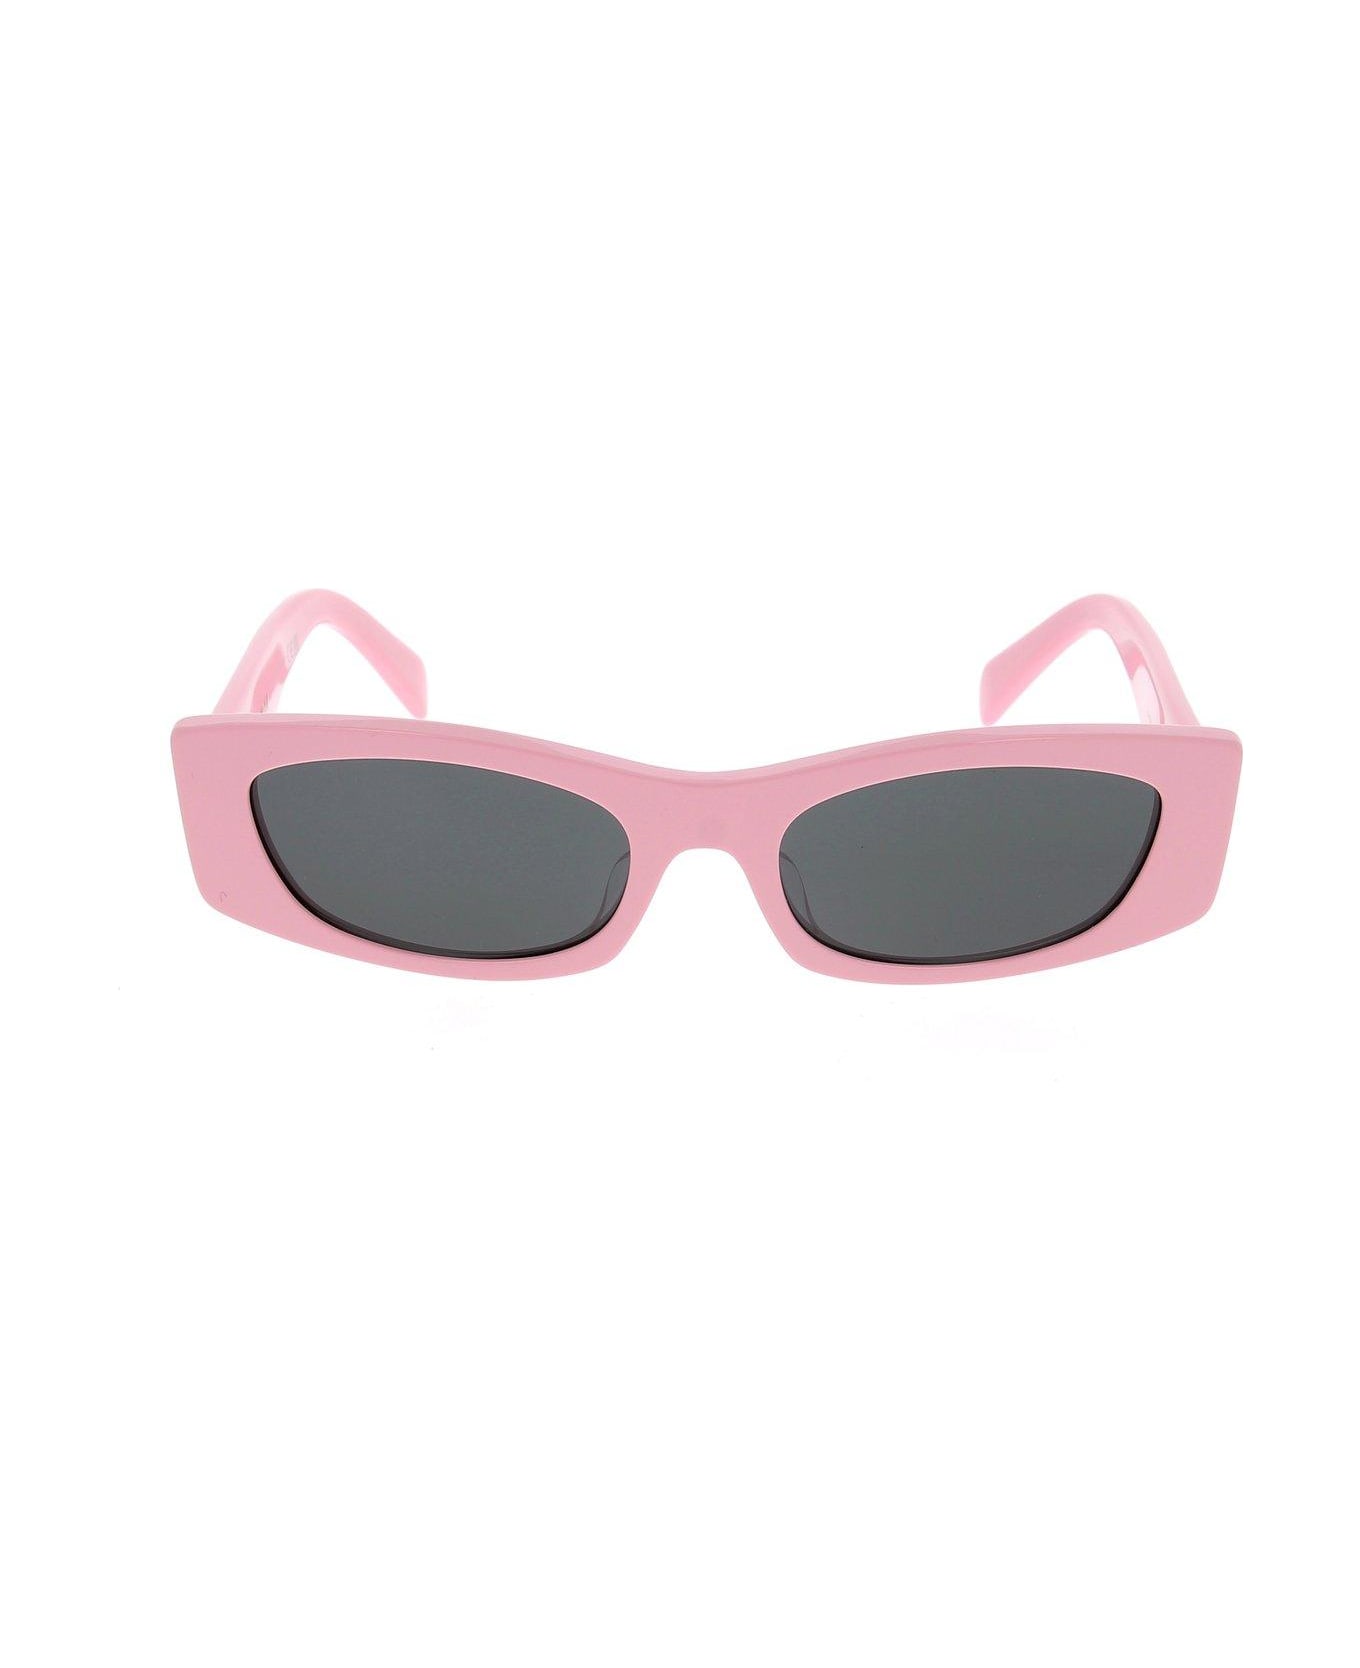 Celine rectangular Frame Sunglasses - 72a